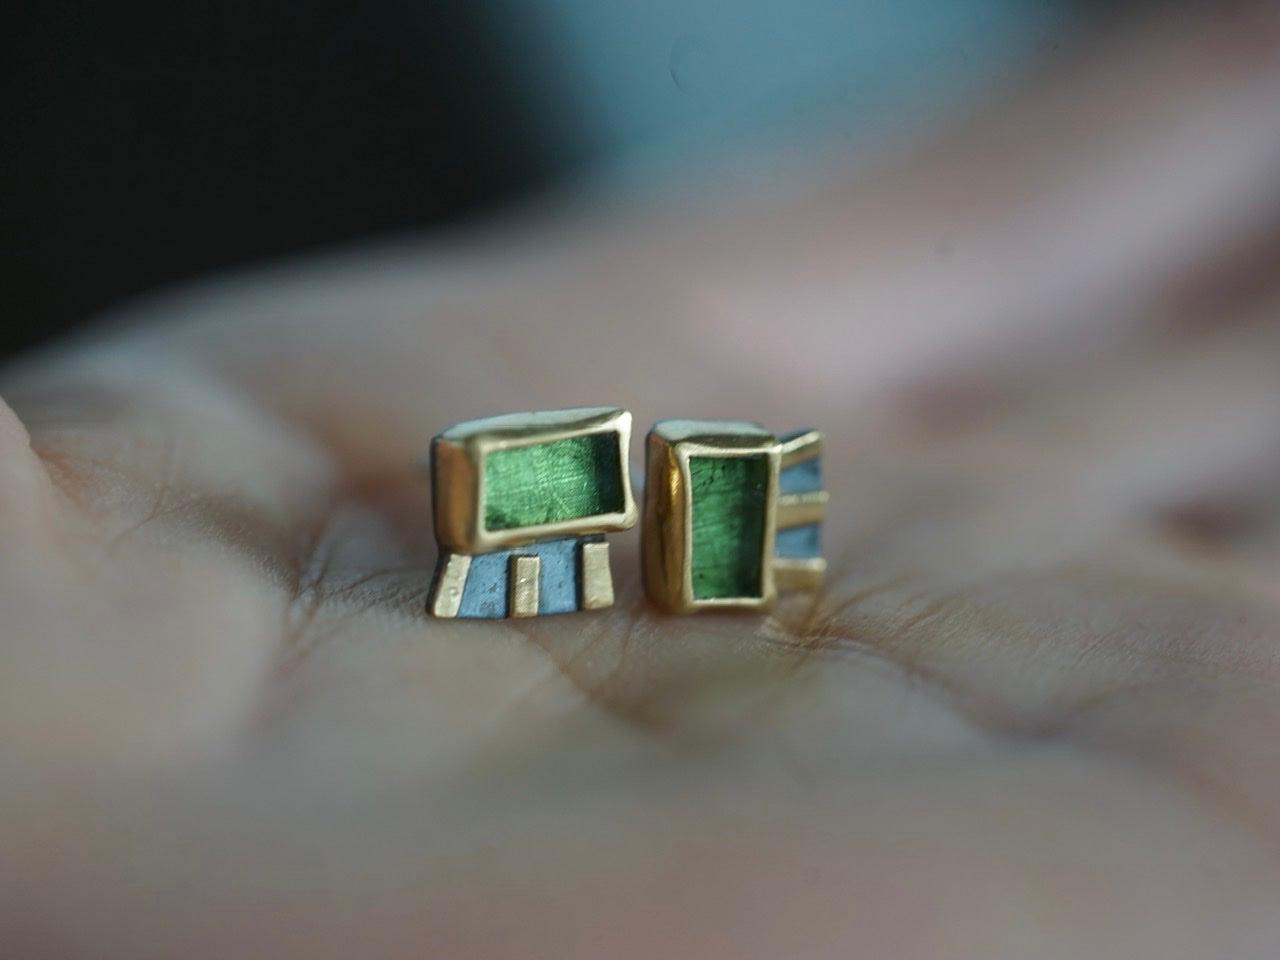 Green tourmaline and 22k gold earrings